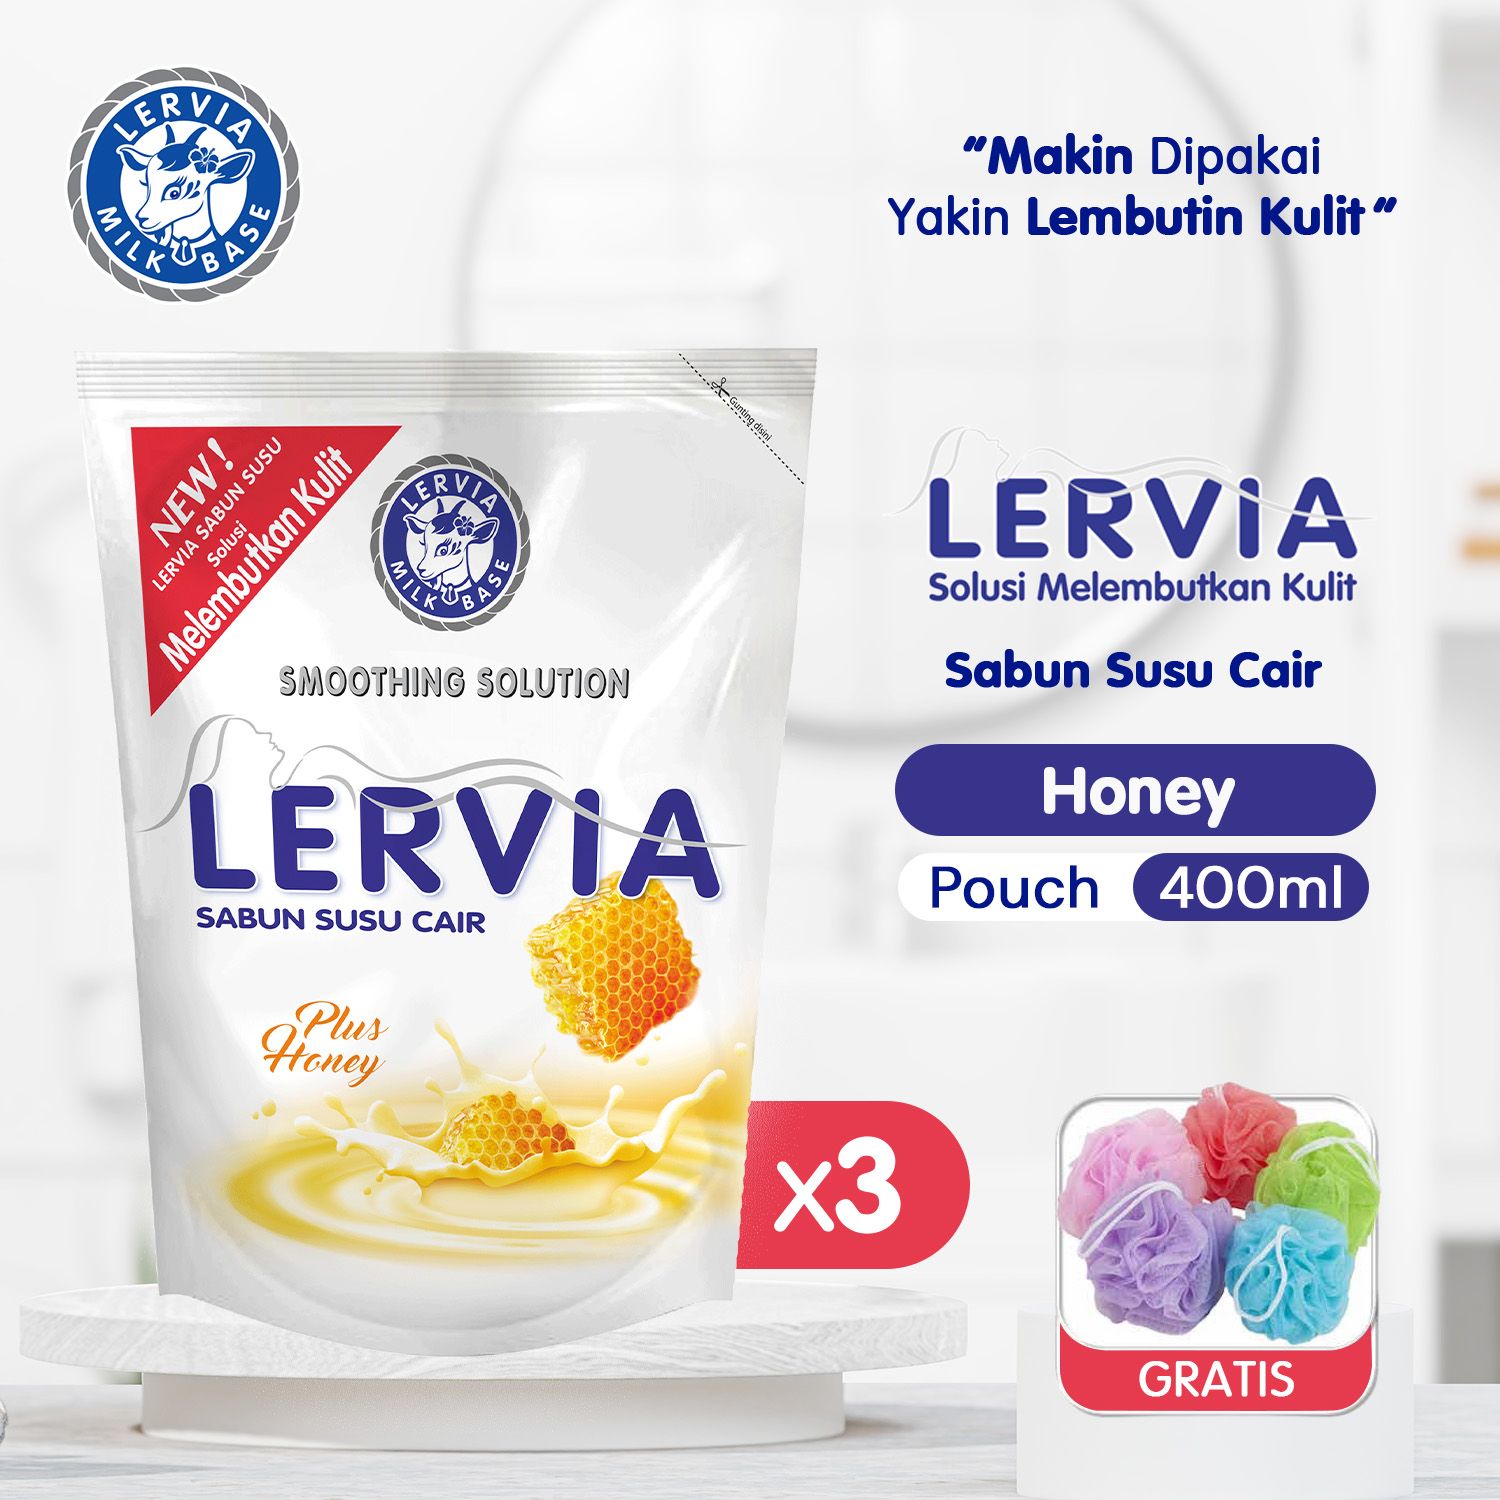 (Free Gift) LERVIA Sabun Susu Cair Plus Honey 400mL Value Pack - 1